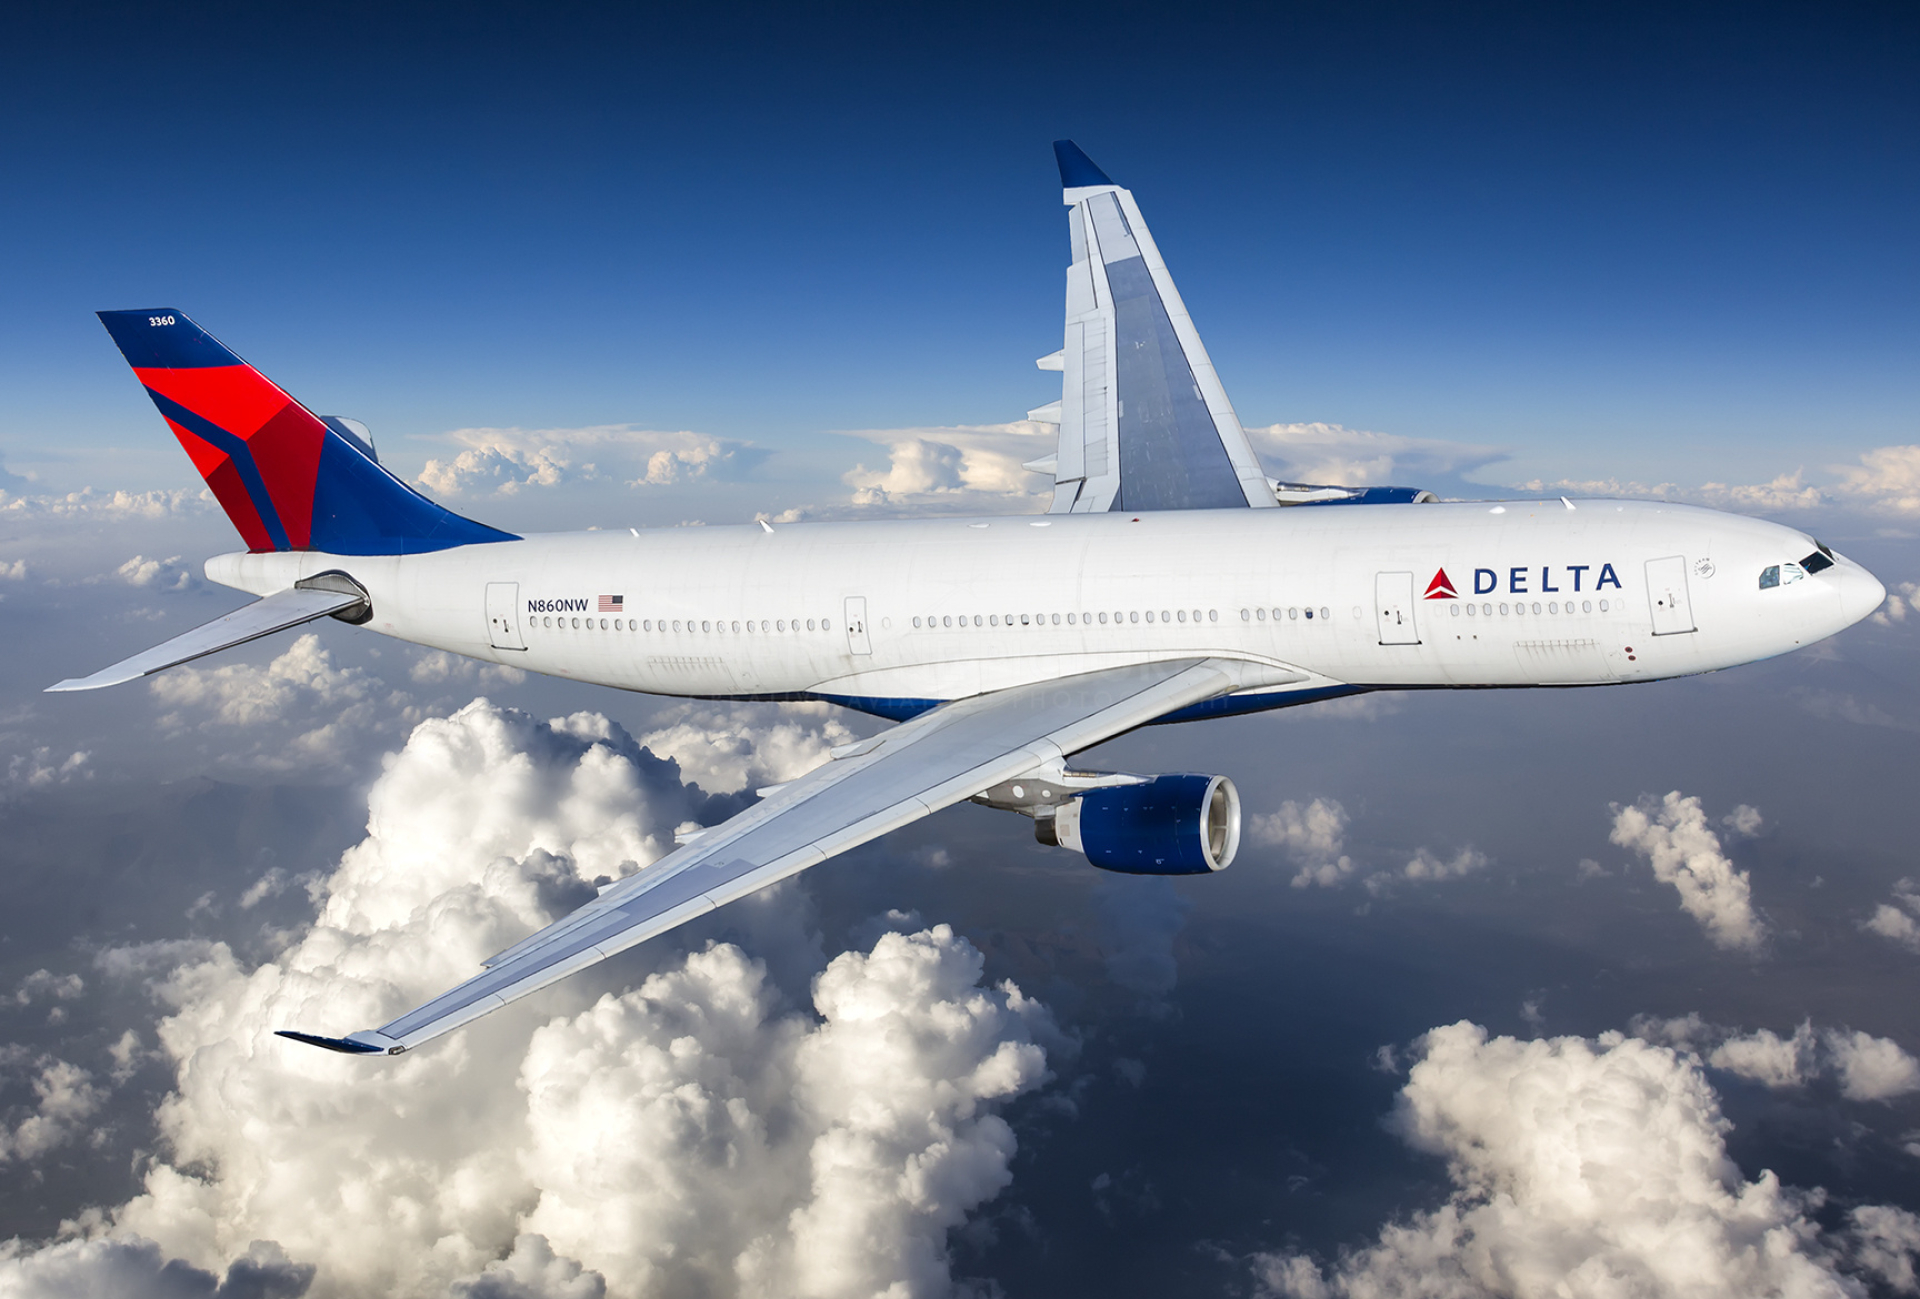 Delta Air Lines, N860NW, In-flight international, Photo ID 1224396, 1920x1300 HD Desktop